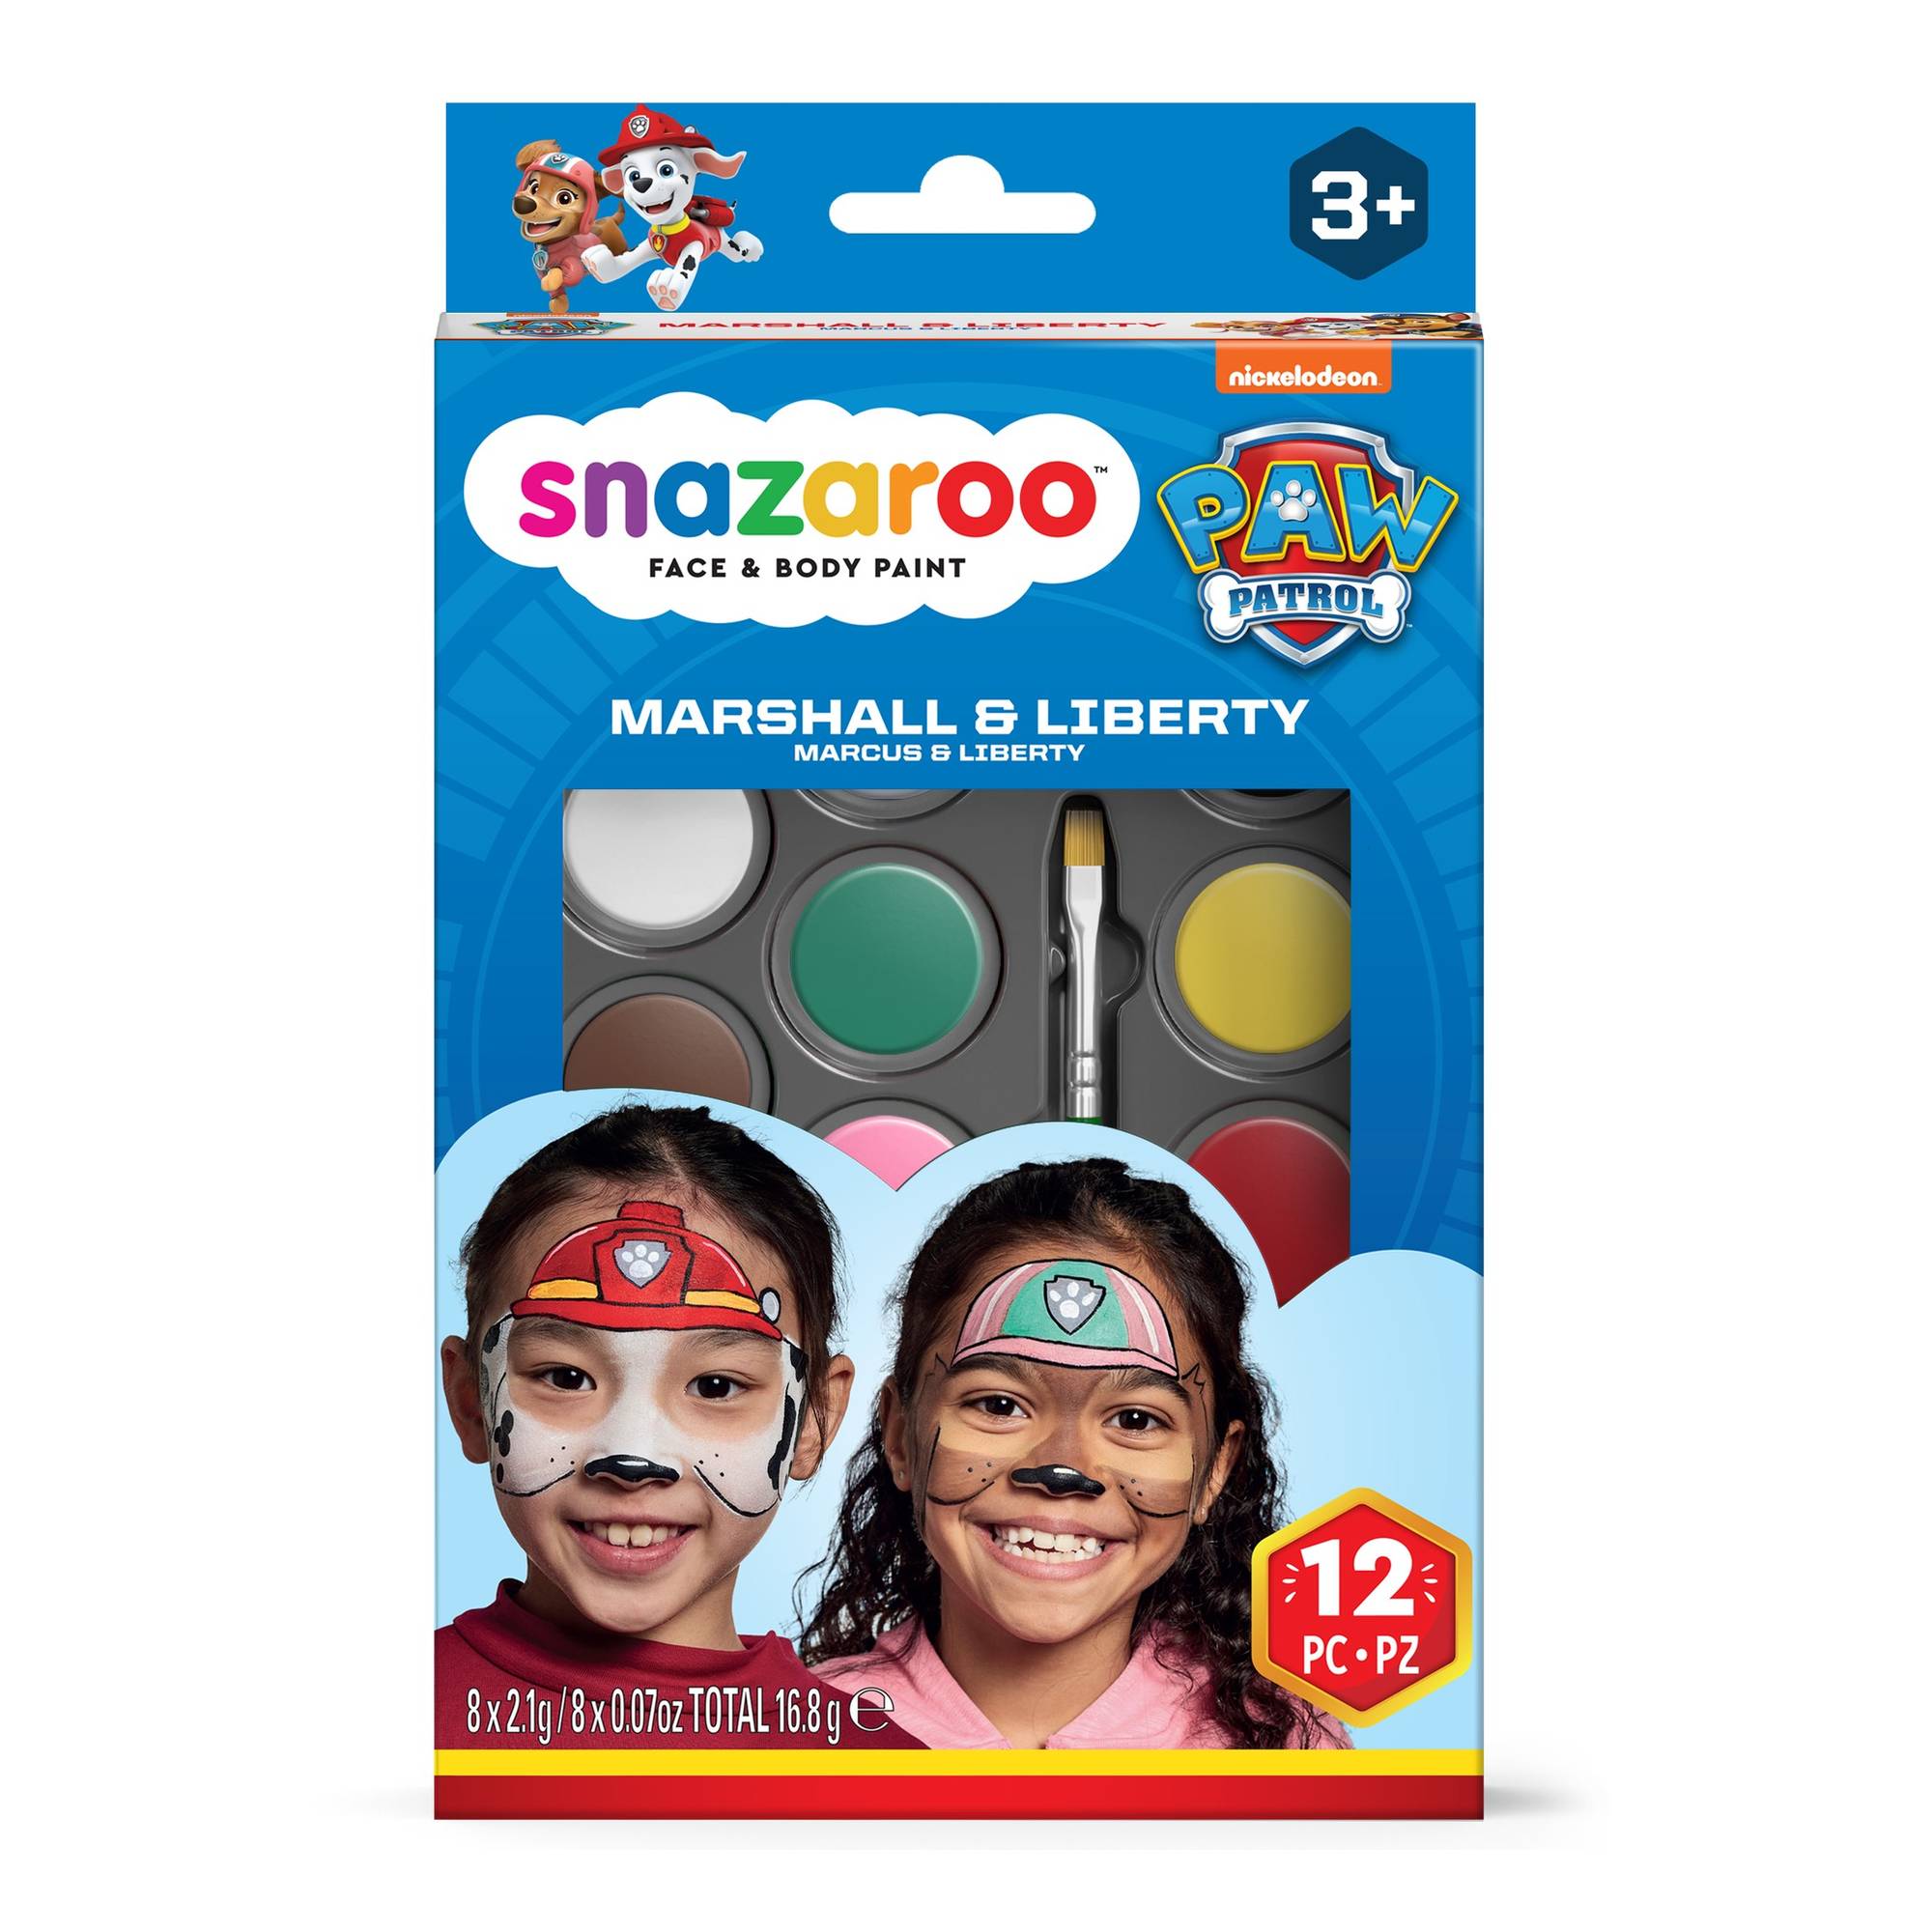 Snazaroo Paw Patrol Marshall and Liberty Face Painting Kit